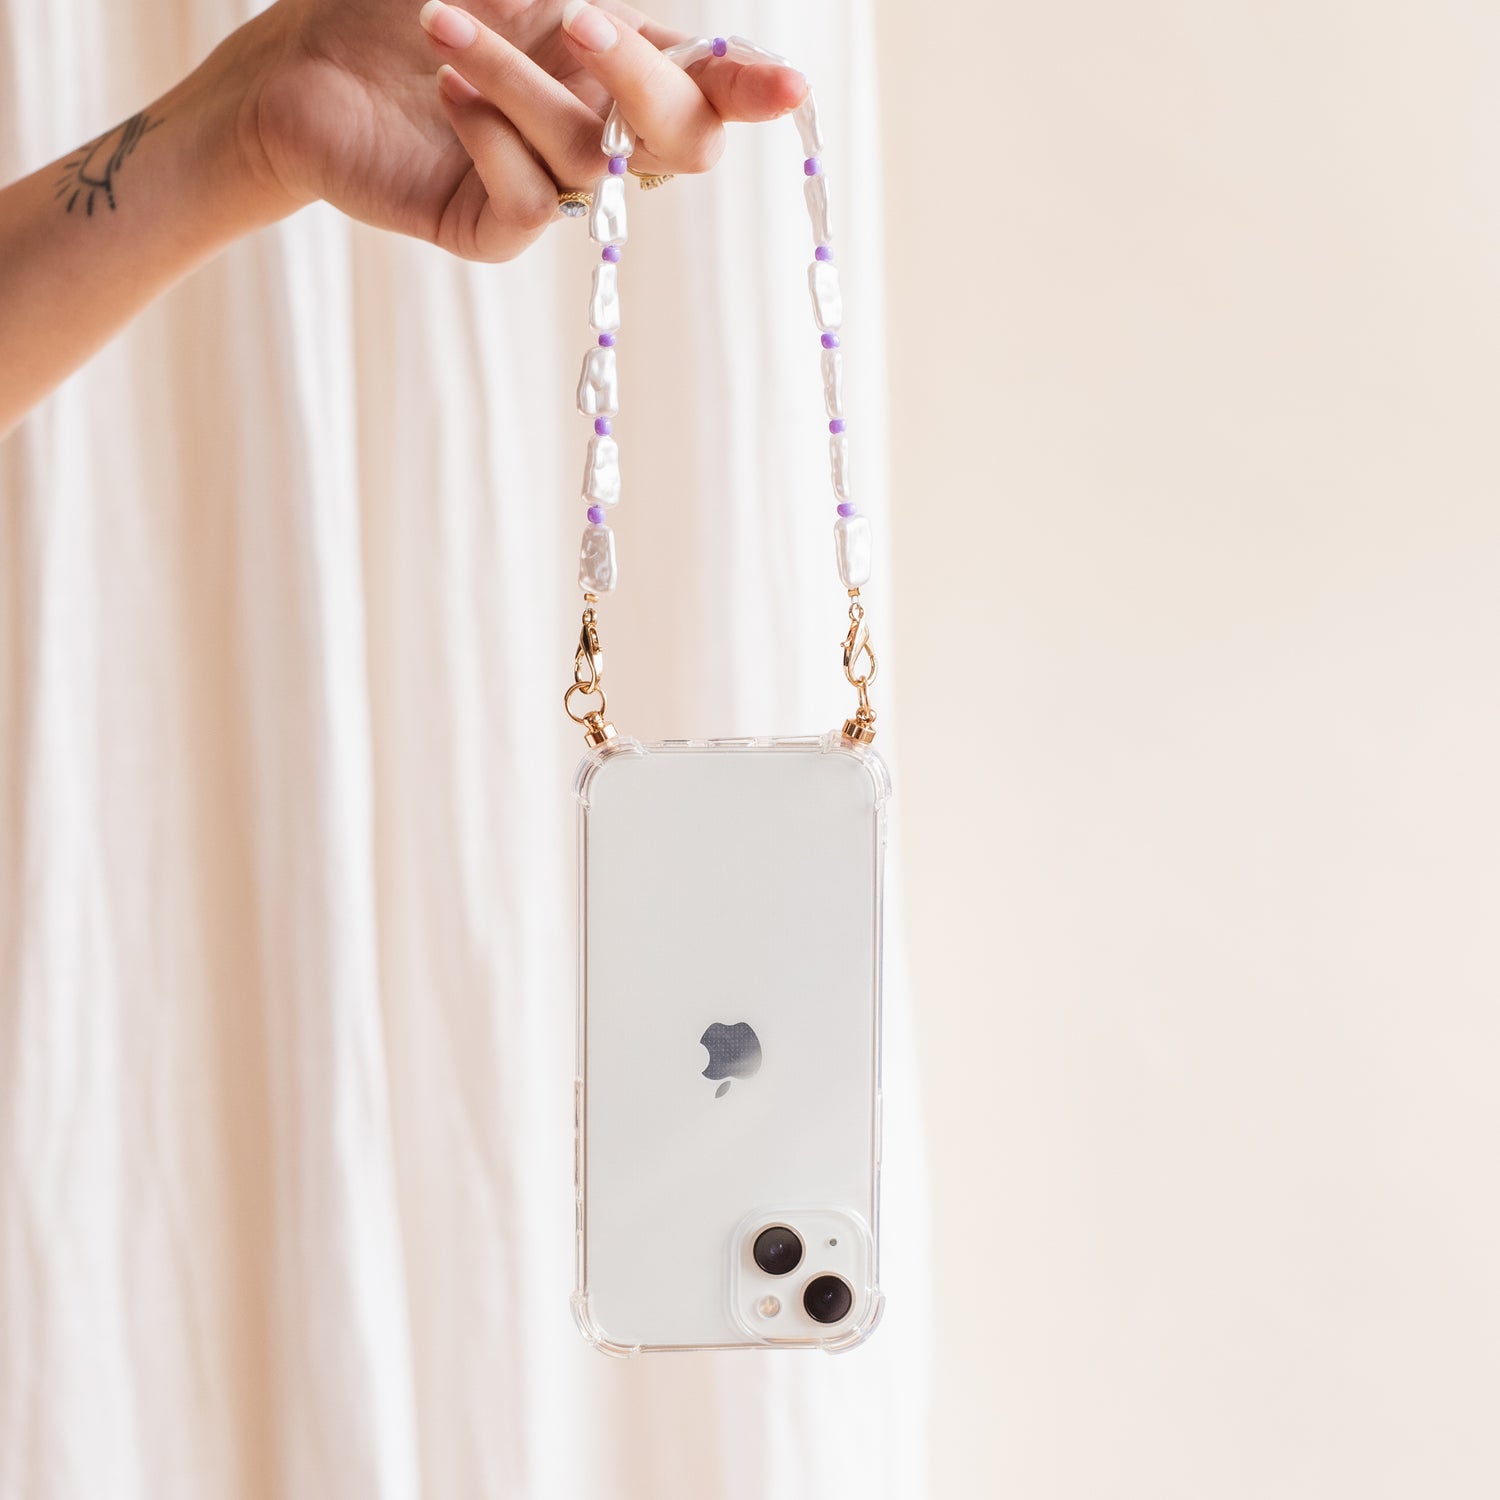 Phone case with purple swirl cord